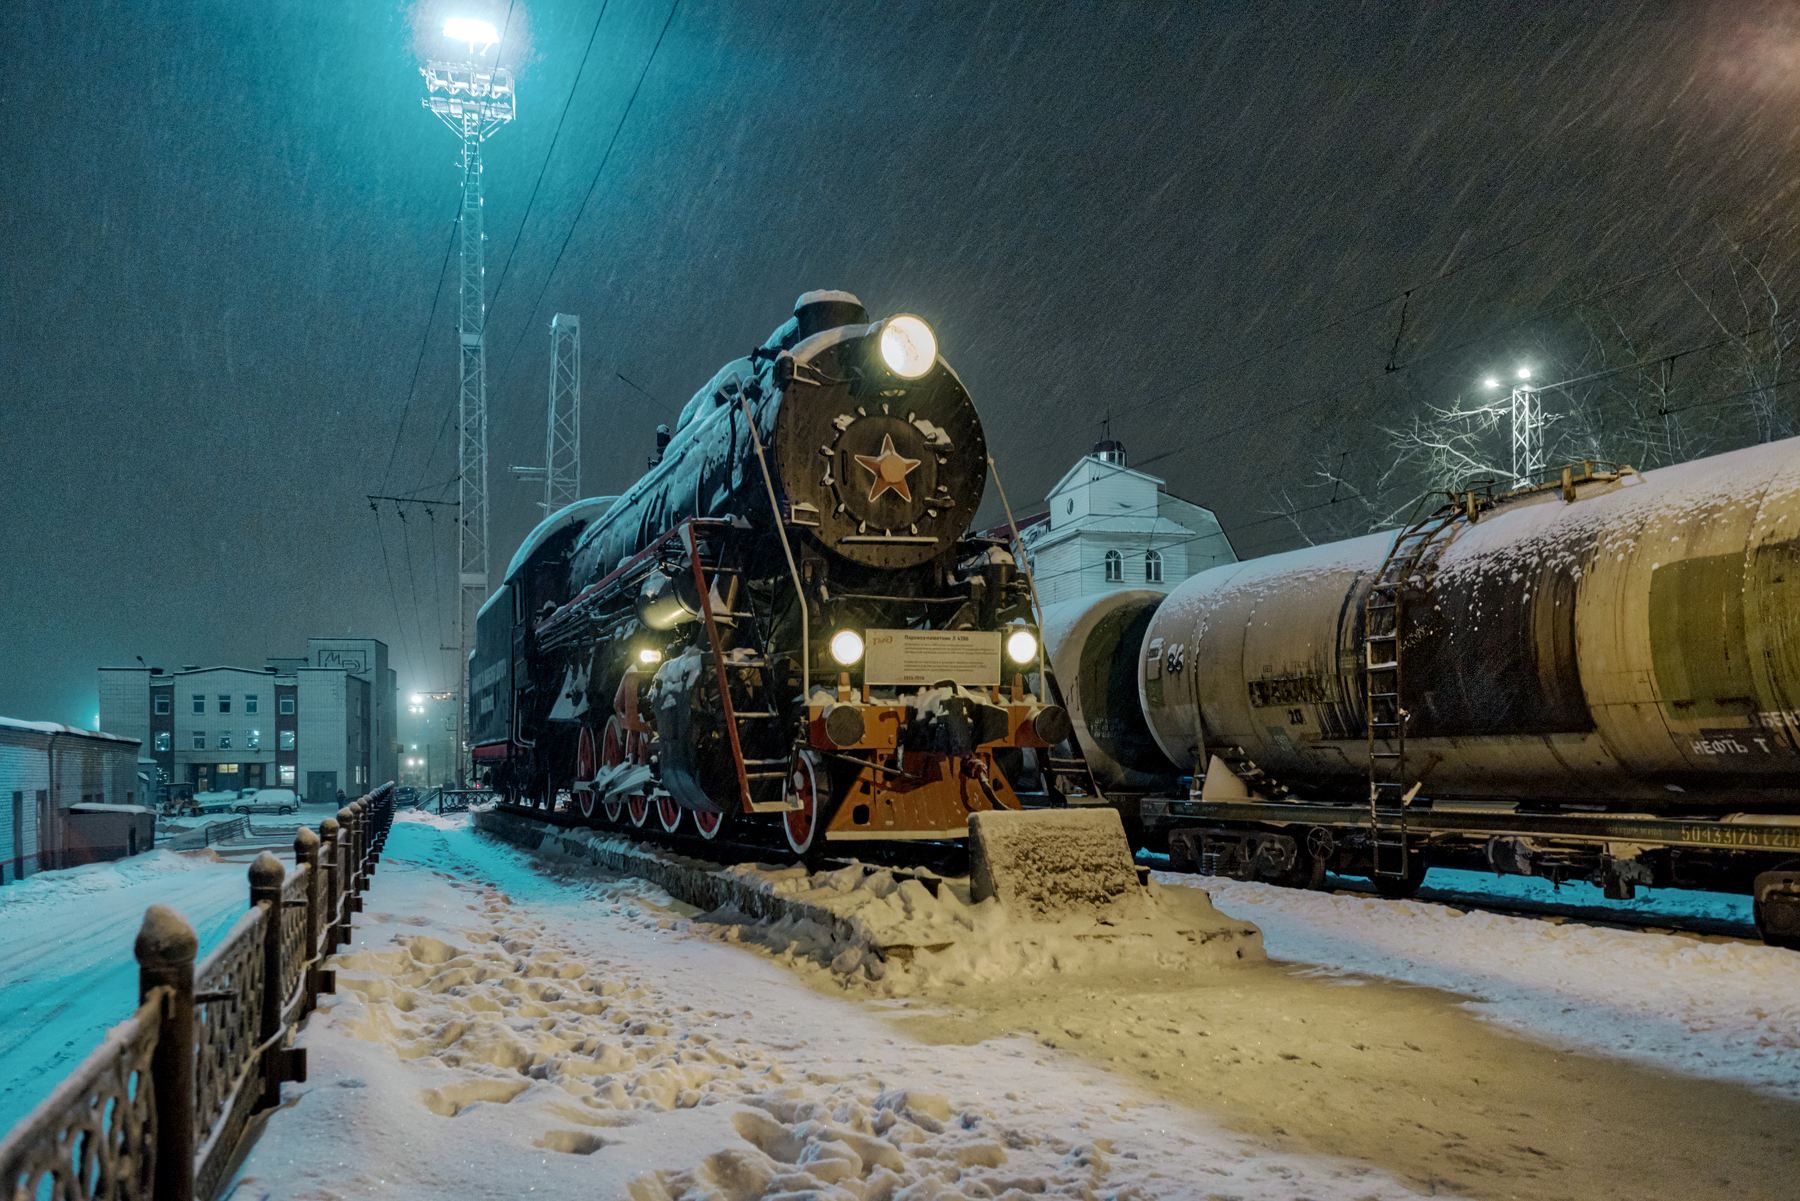 General 1800x1201 night train winter snow locomotive Russia